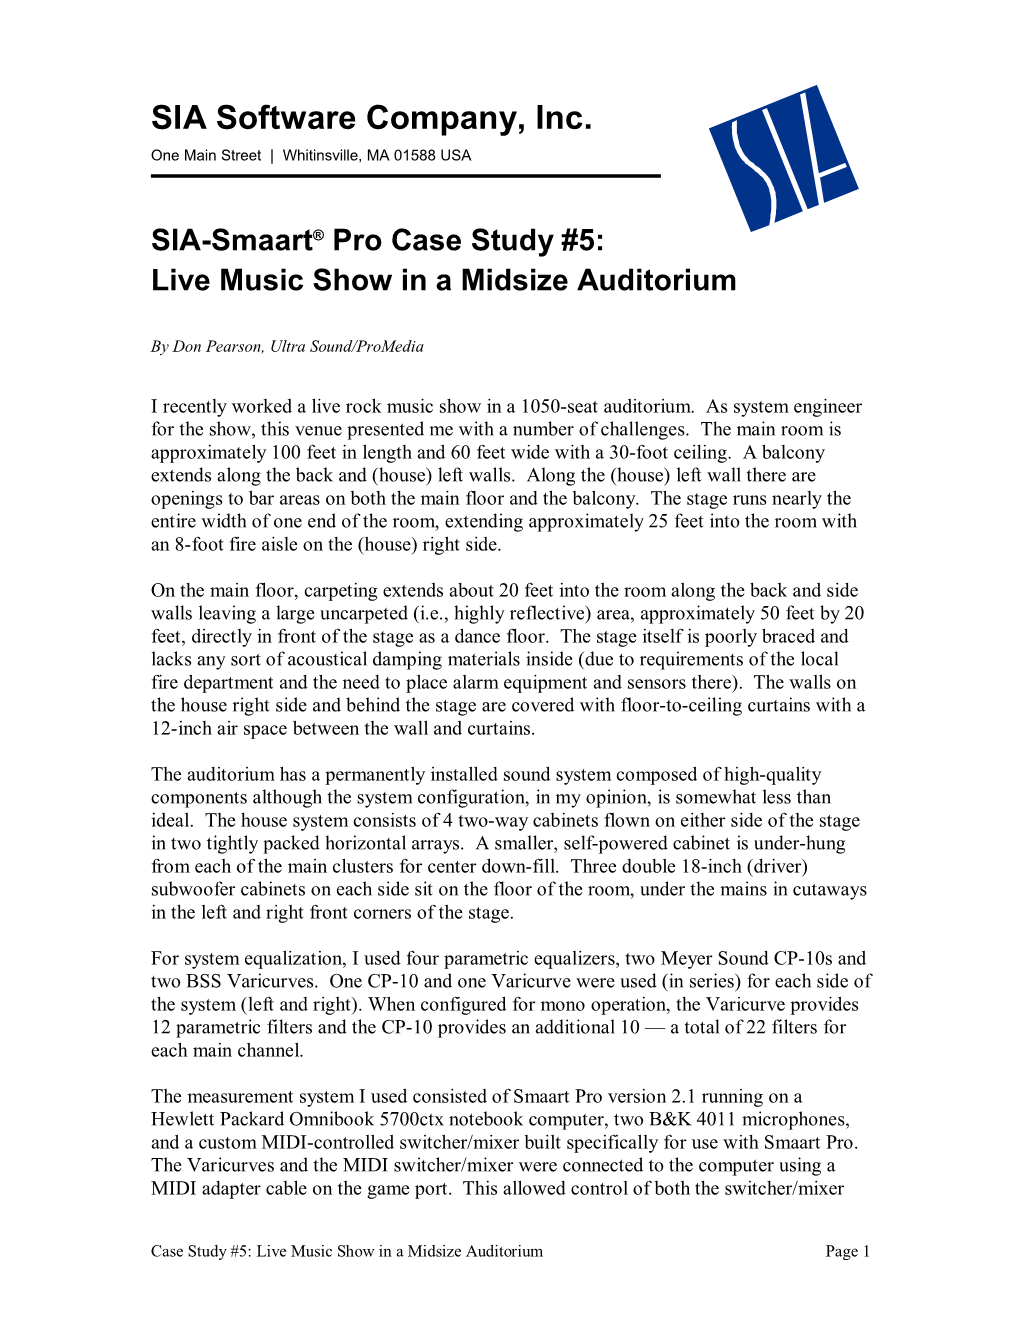 SIA-Smaart Pro Case Study #5